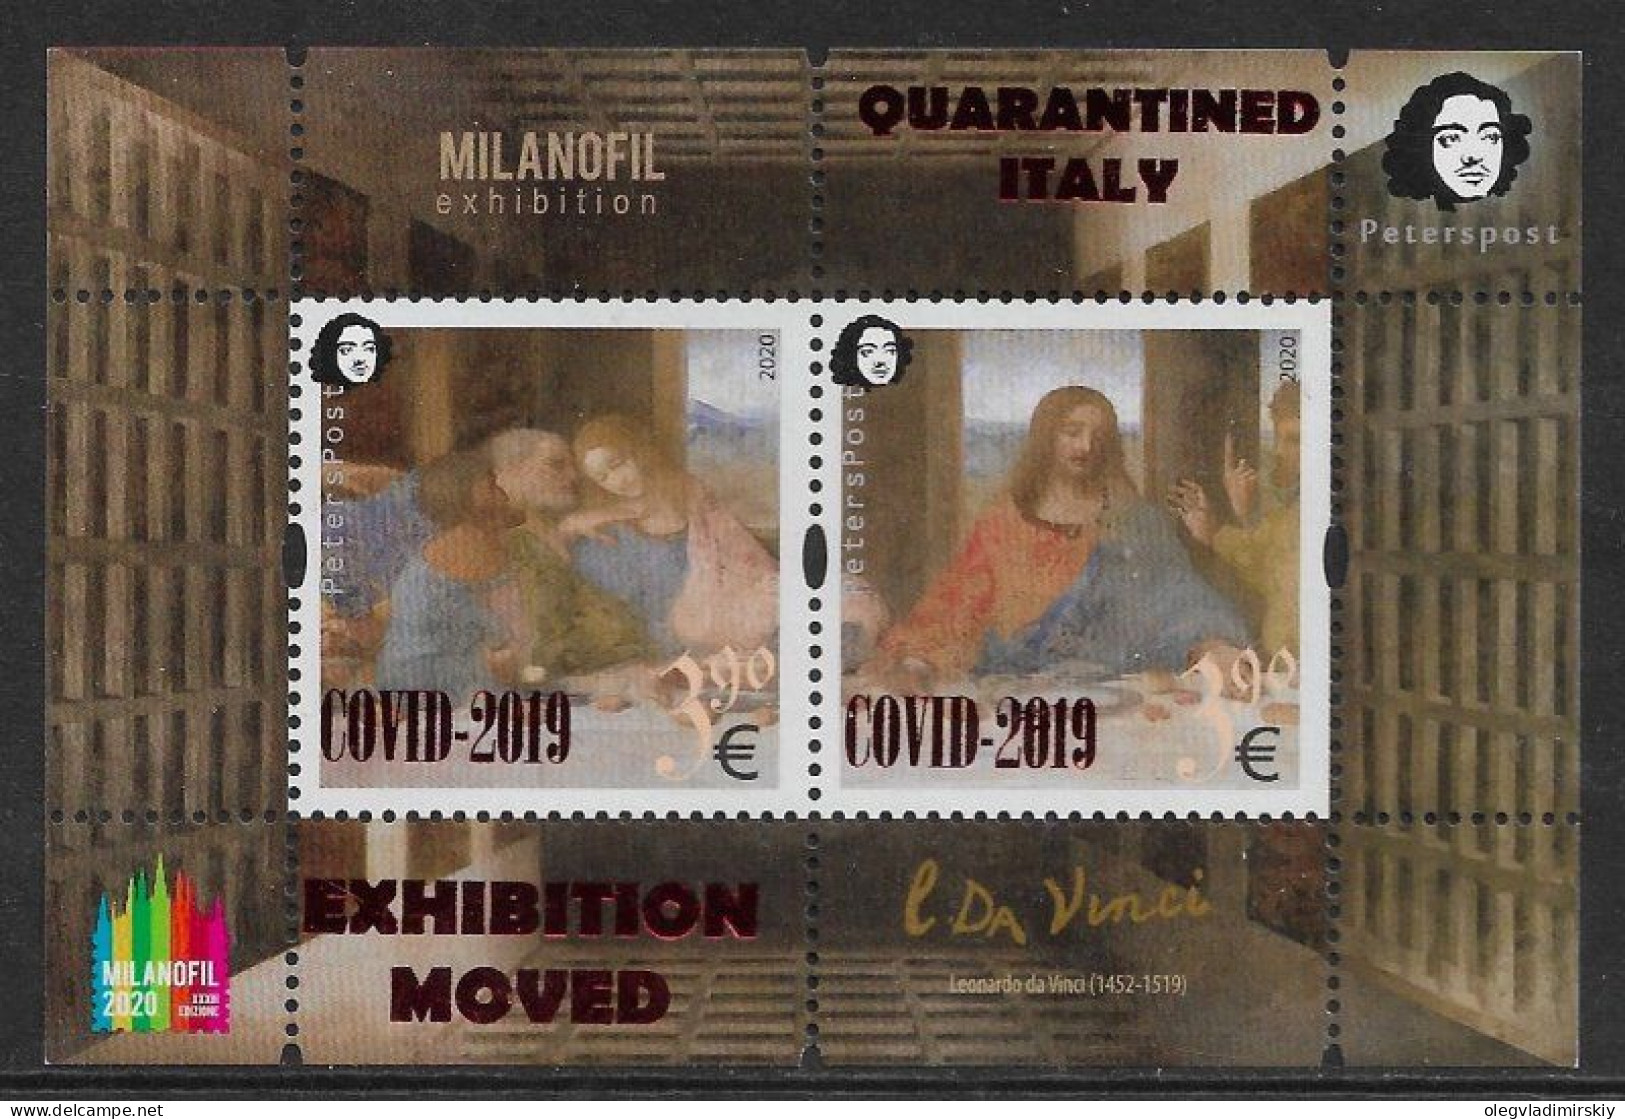 Finland 2020 Quarantined Italy COVID-2019 Leonardo Da Vinci MILANOFIL Exhibition Muved Peterspost Block Overprint MNH - Médecine